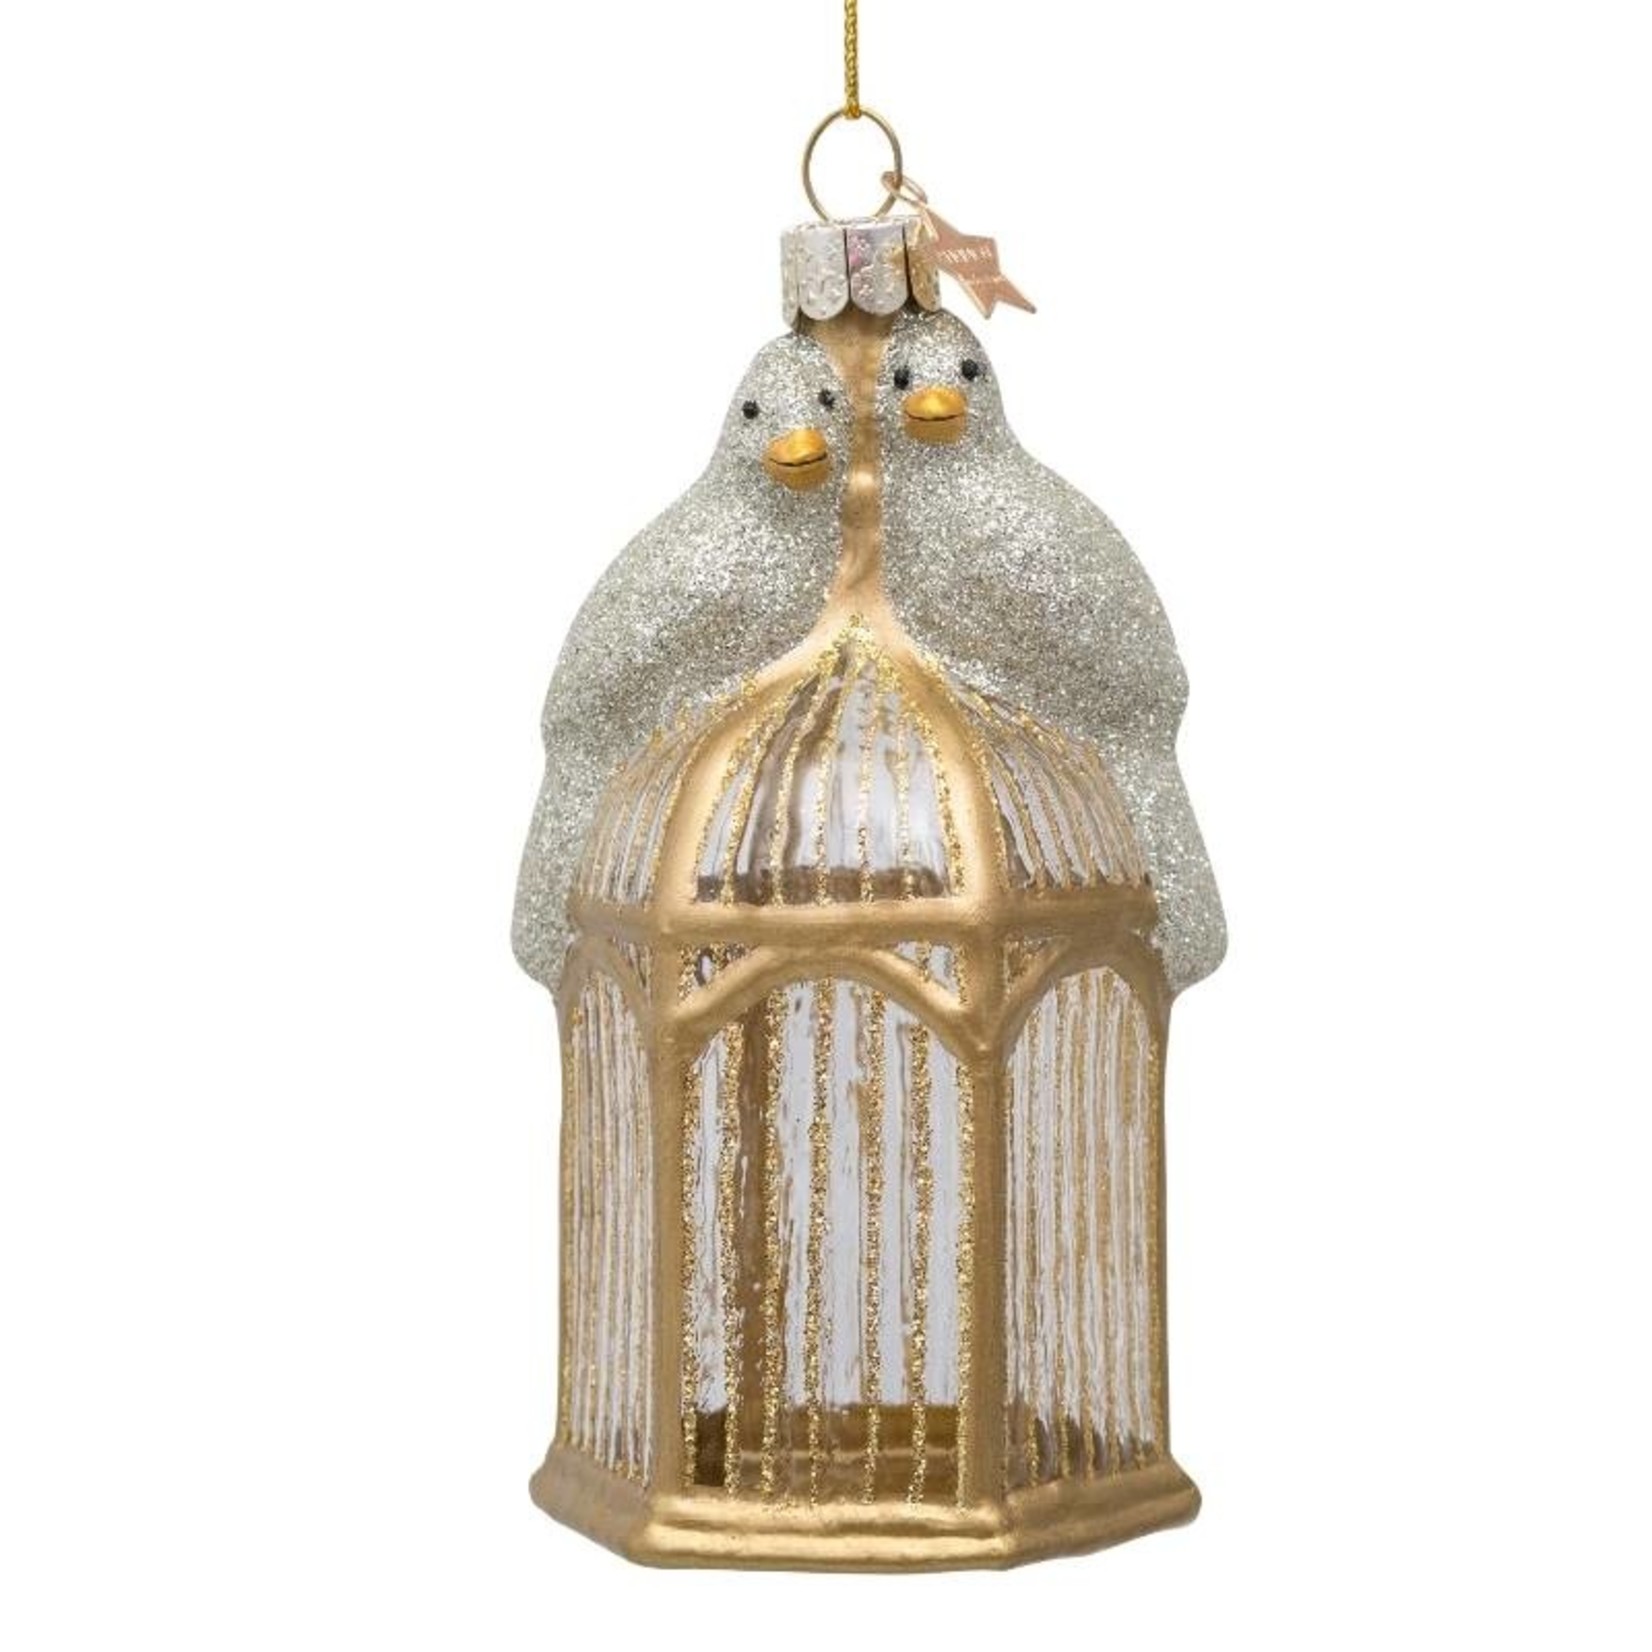 Vondels Ornament birds on cage - silver/gold